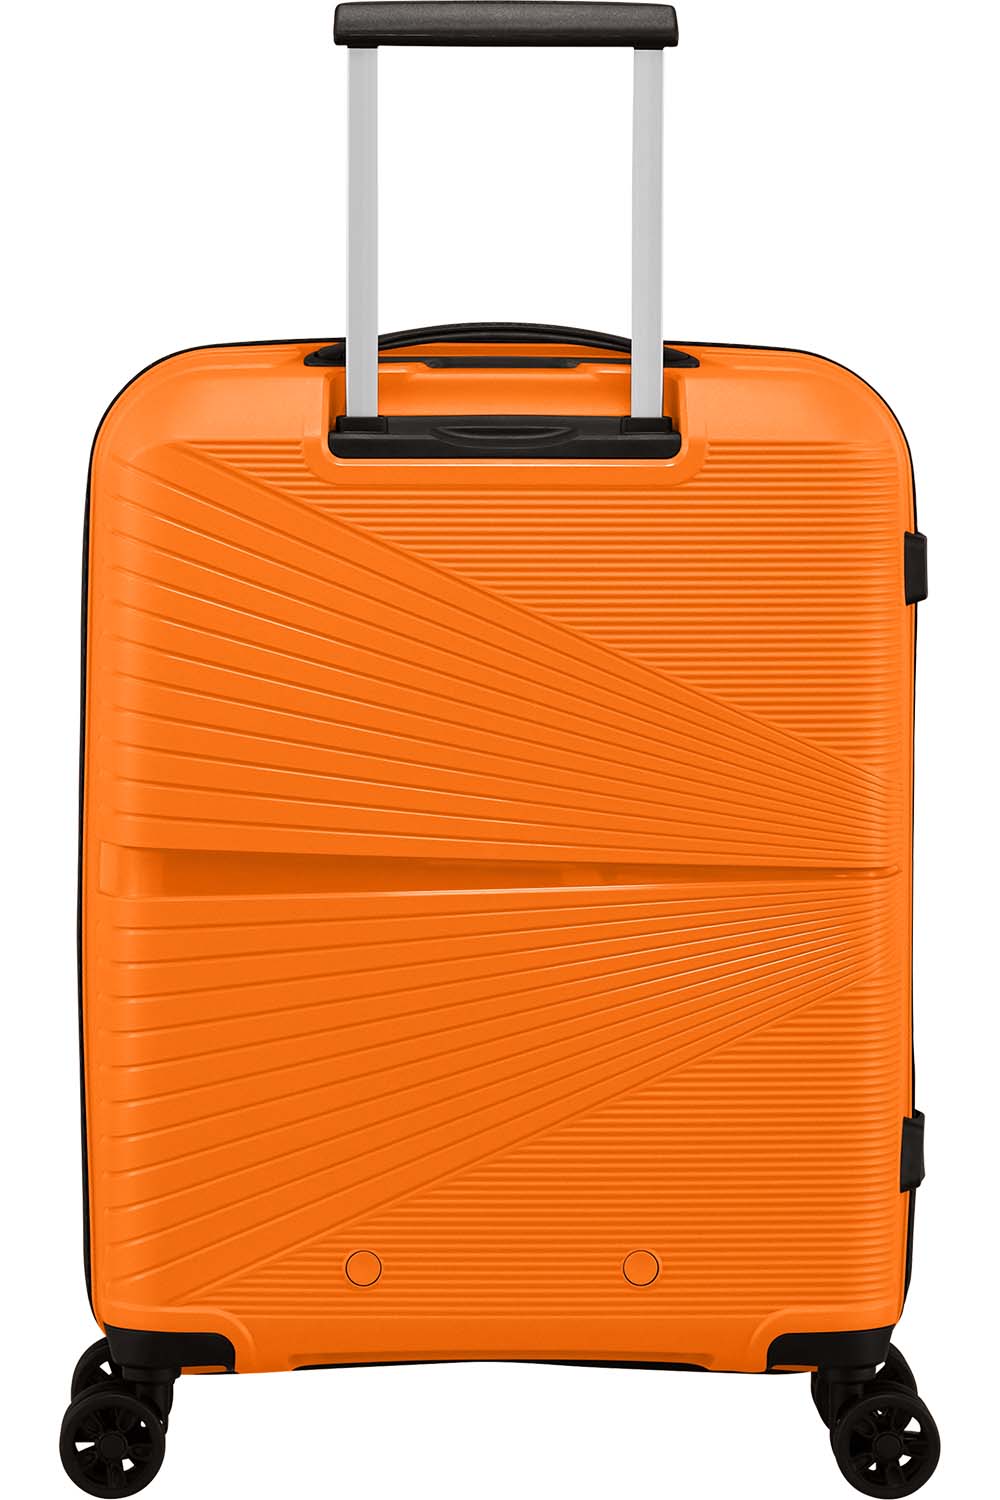 American Tourister Luggage Airconic 55cm מזוודה קטנה לעלייה למטוס 20"